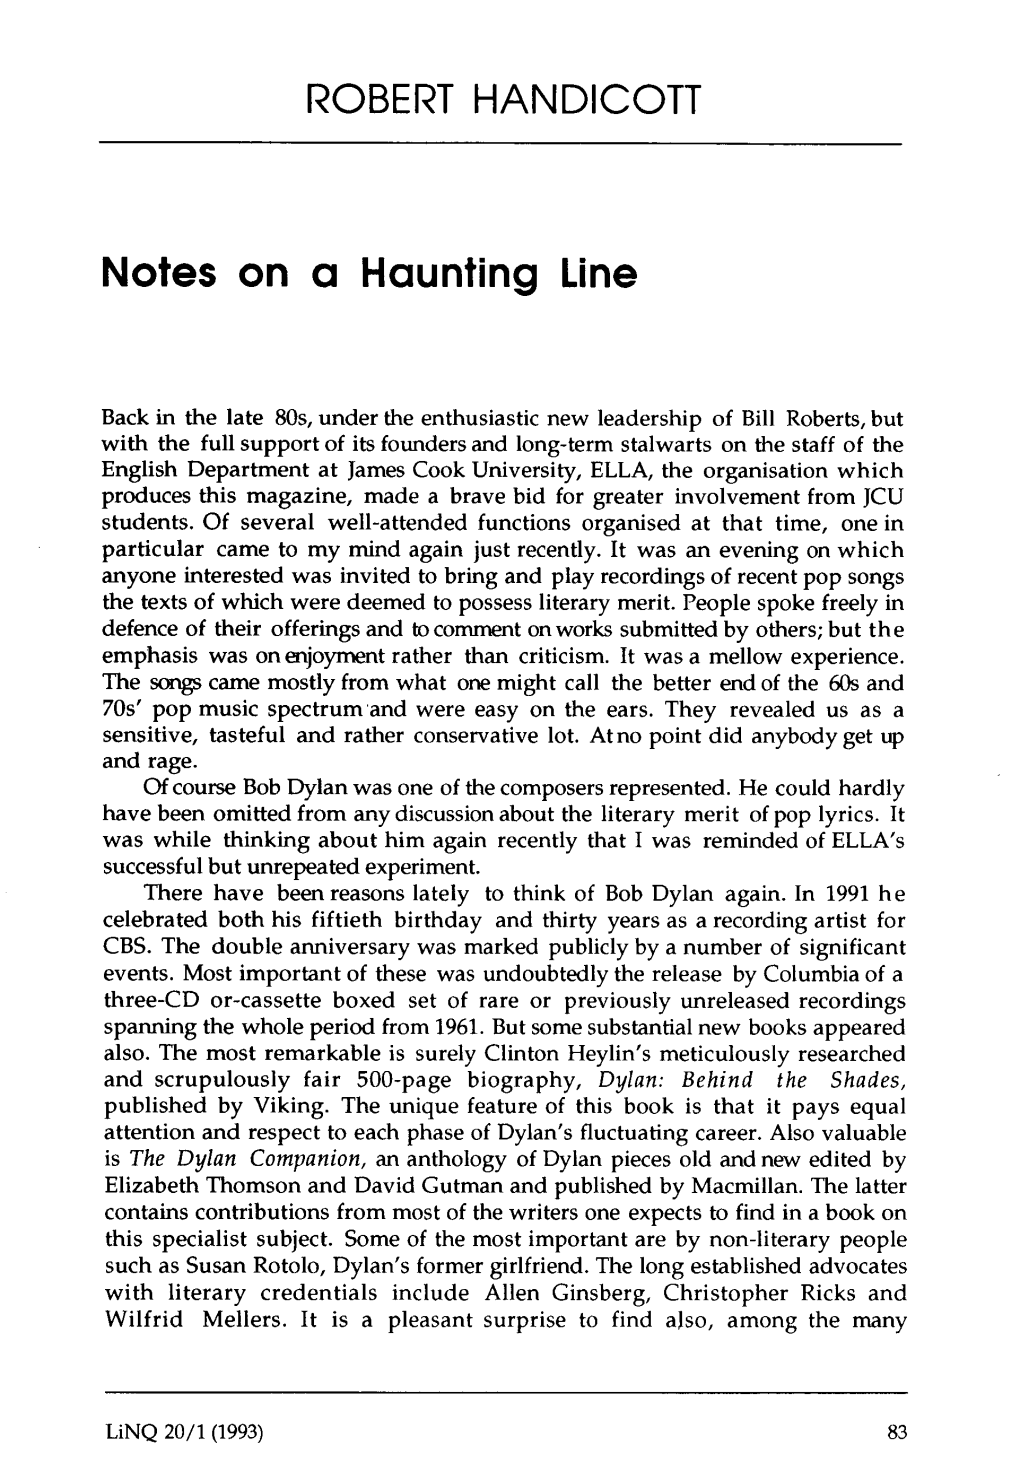 ROBERT HANDICOTT Notes on a Haunting Line